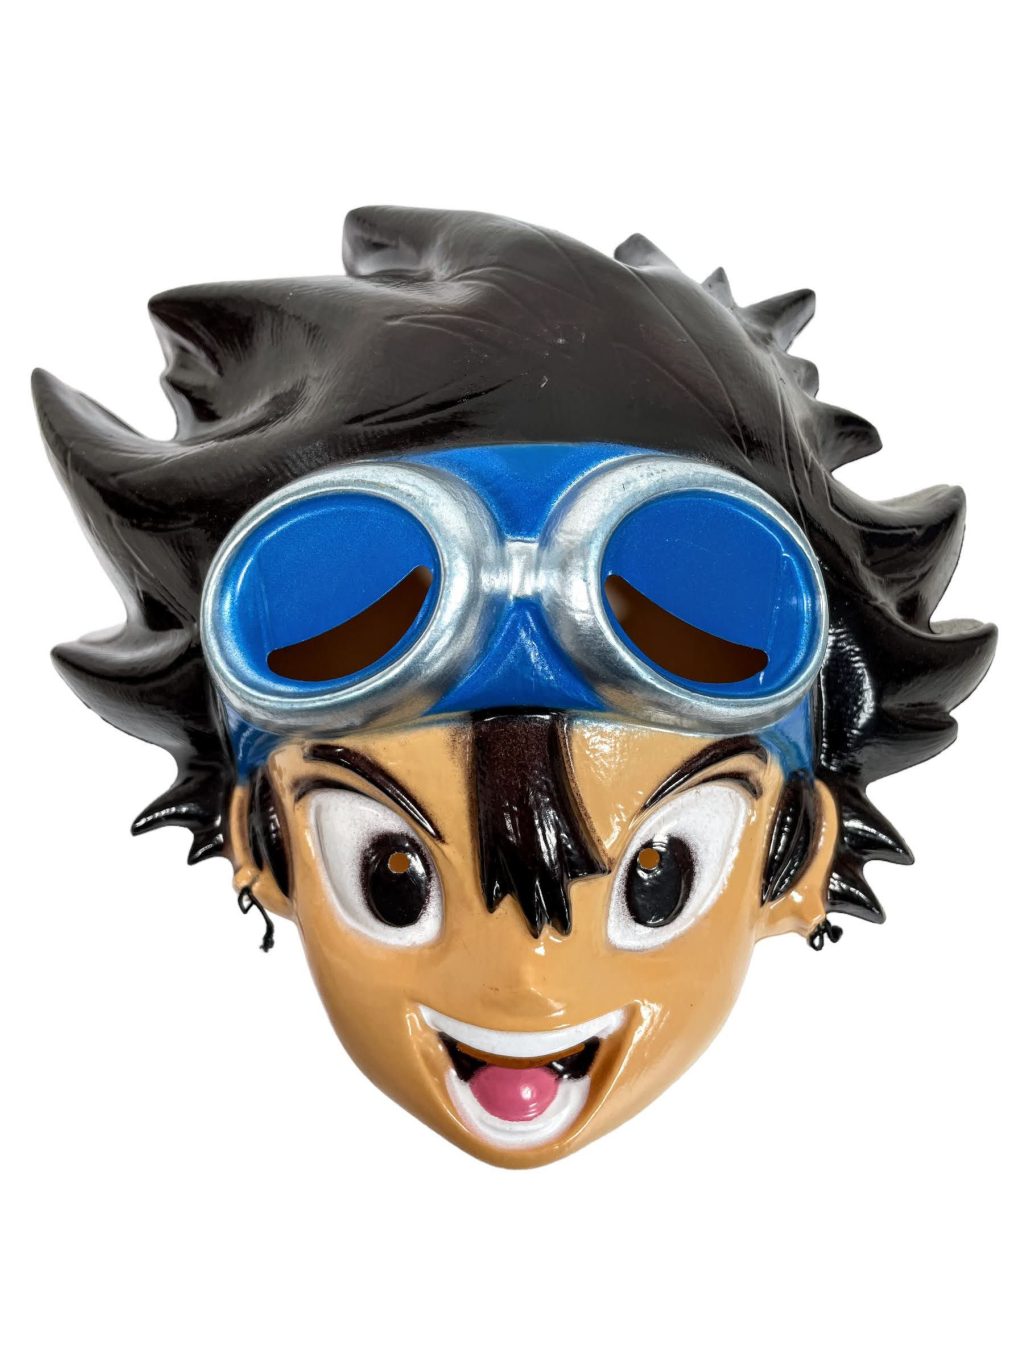 Vintage French Digimon Aki Yoshi Toy Fancy Dress Mask Costume Children Kids Disguise circa 1999